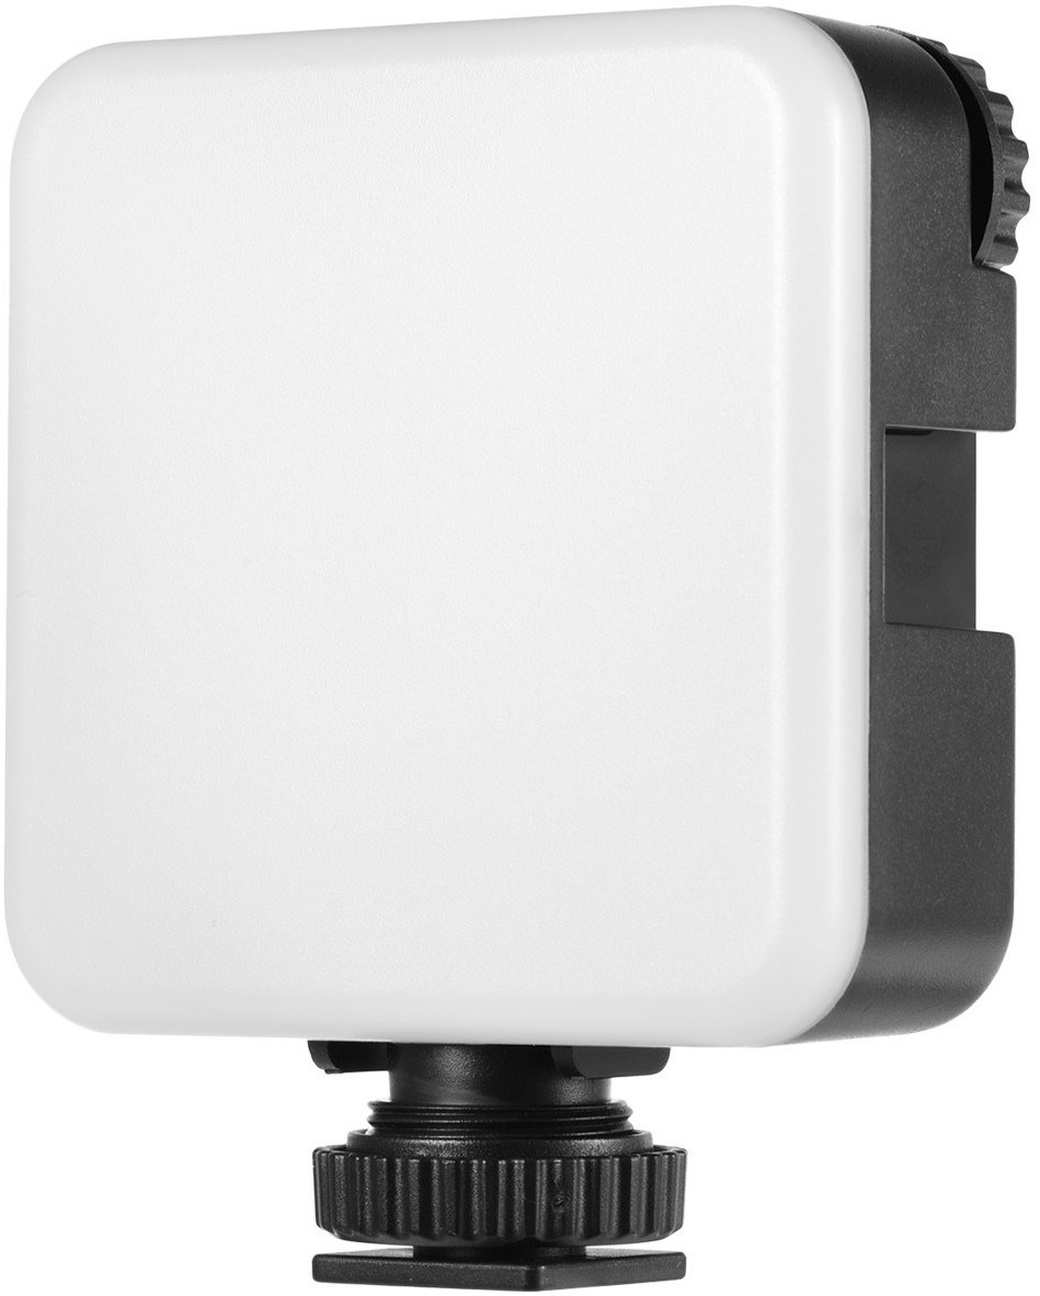 Светодиодная лампа Andoer KM-72B Mini с адаптером на холодный башмак для Canon Nikon Sony Cameas фото